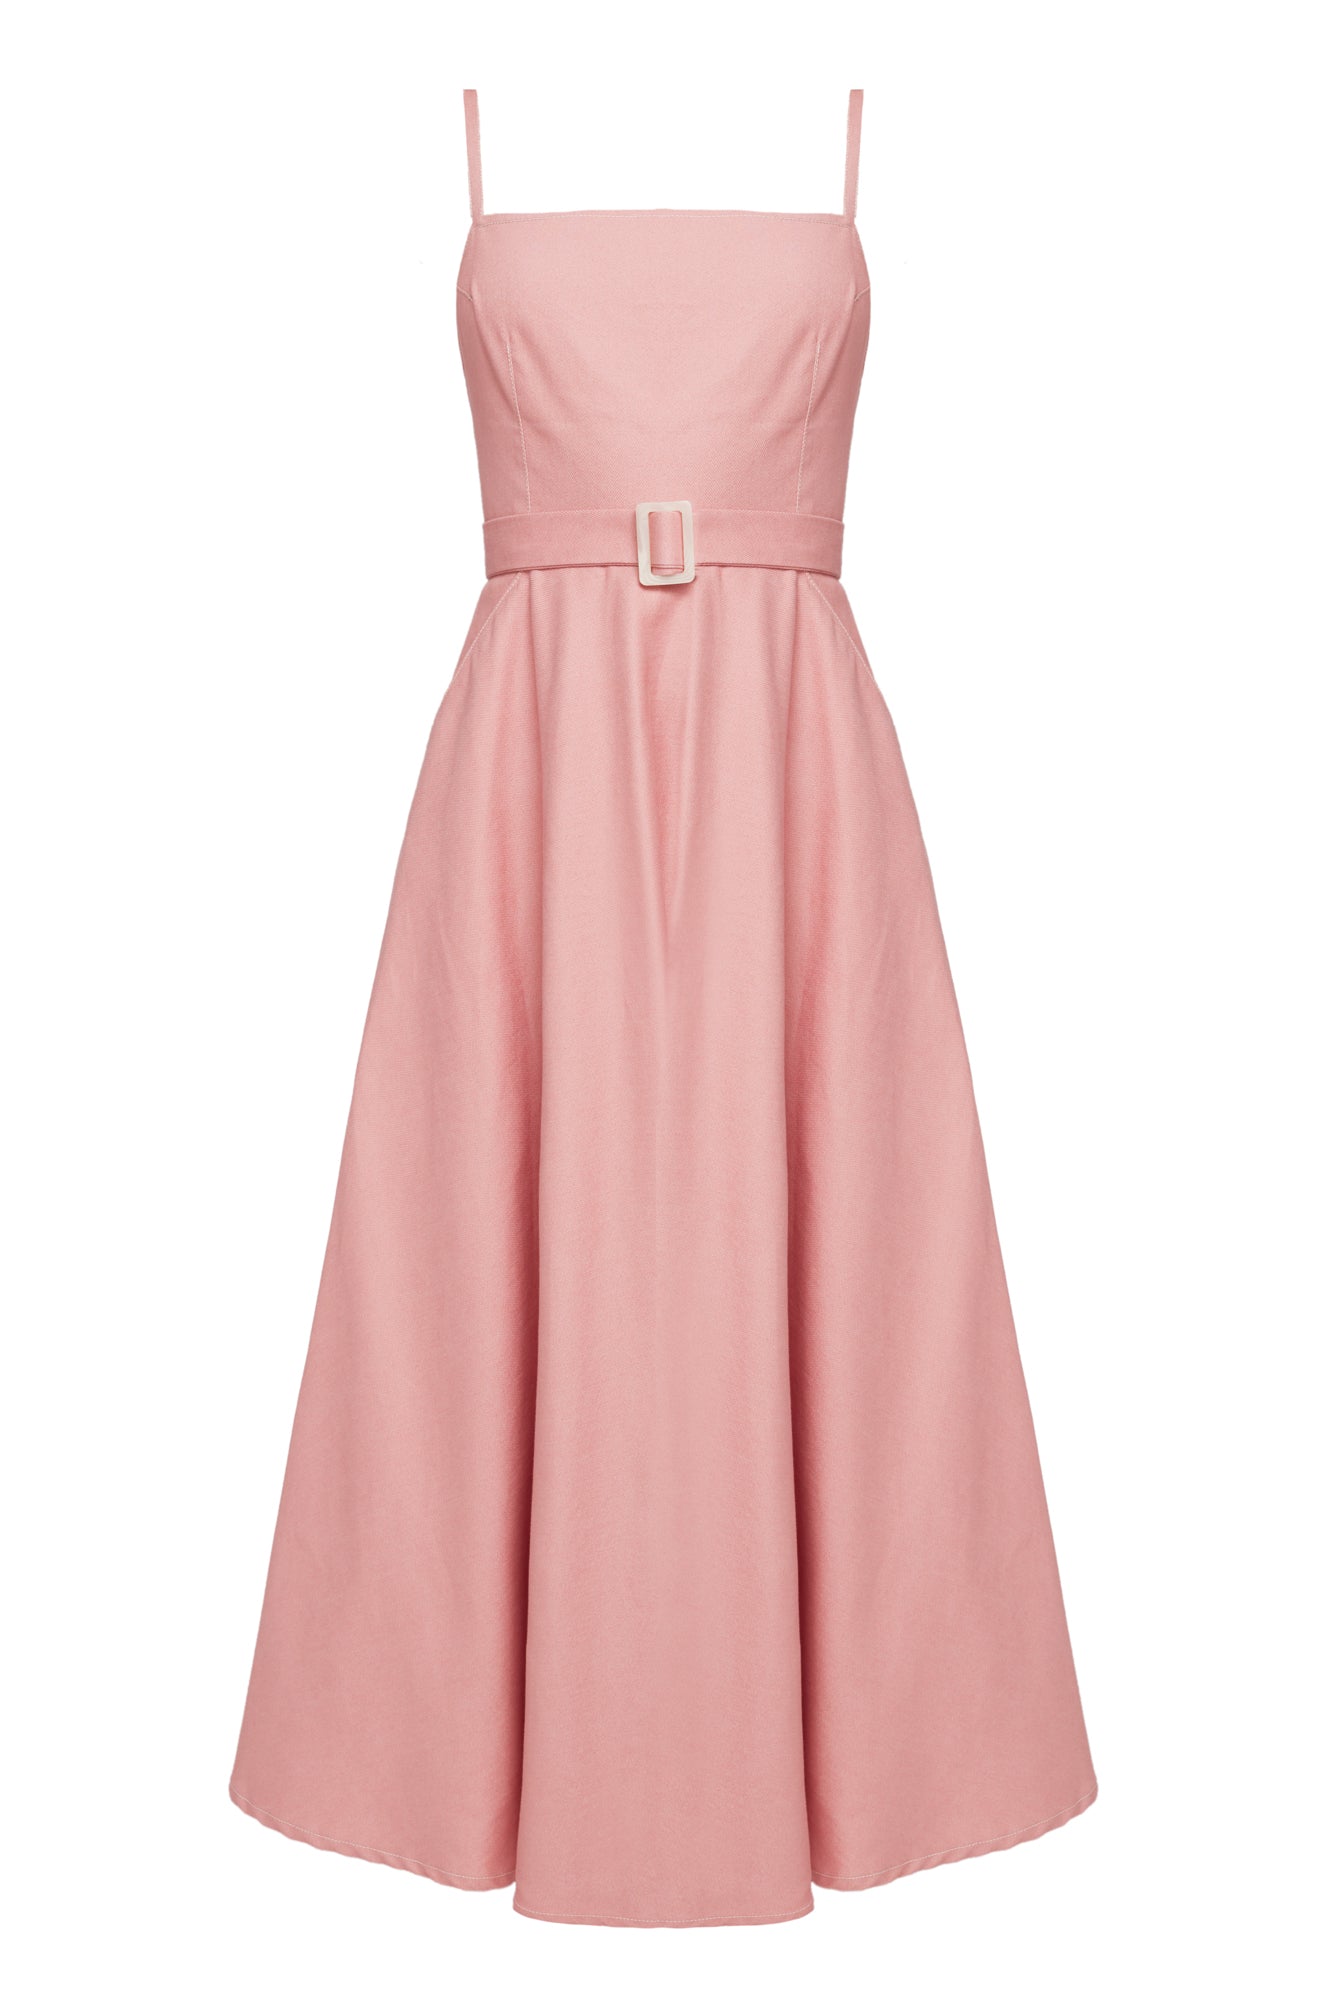 MATISSA Pastel Pink Denim Midi Dress - Retro Skirt Design